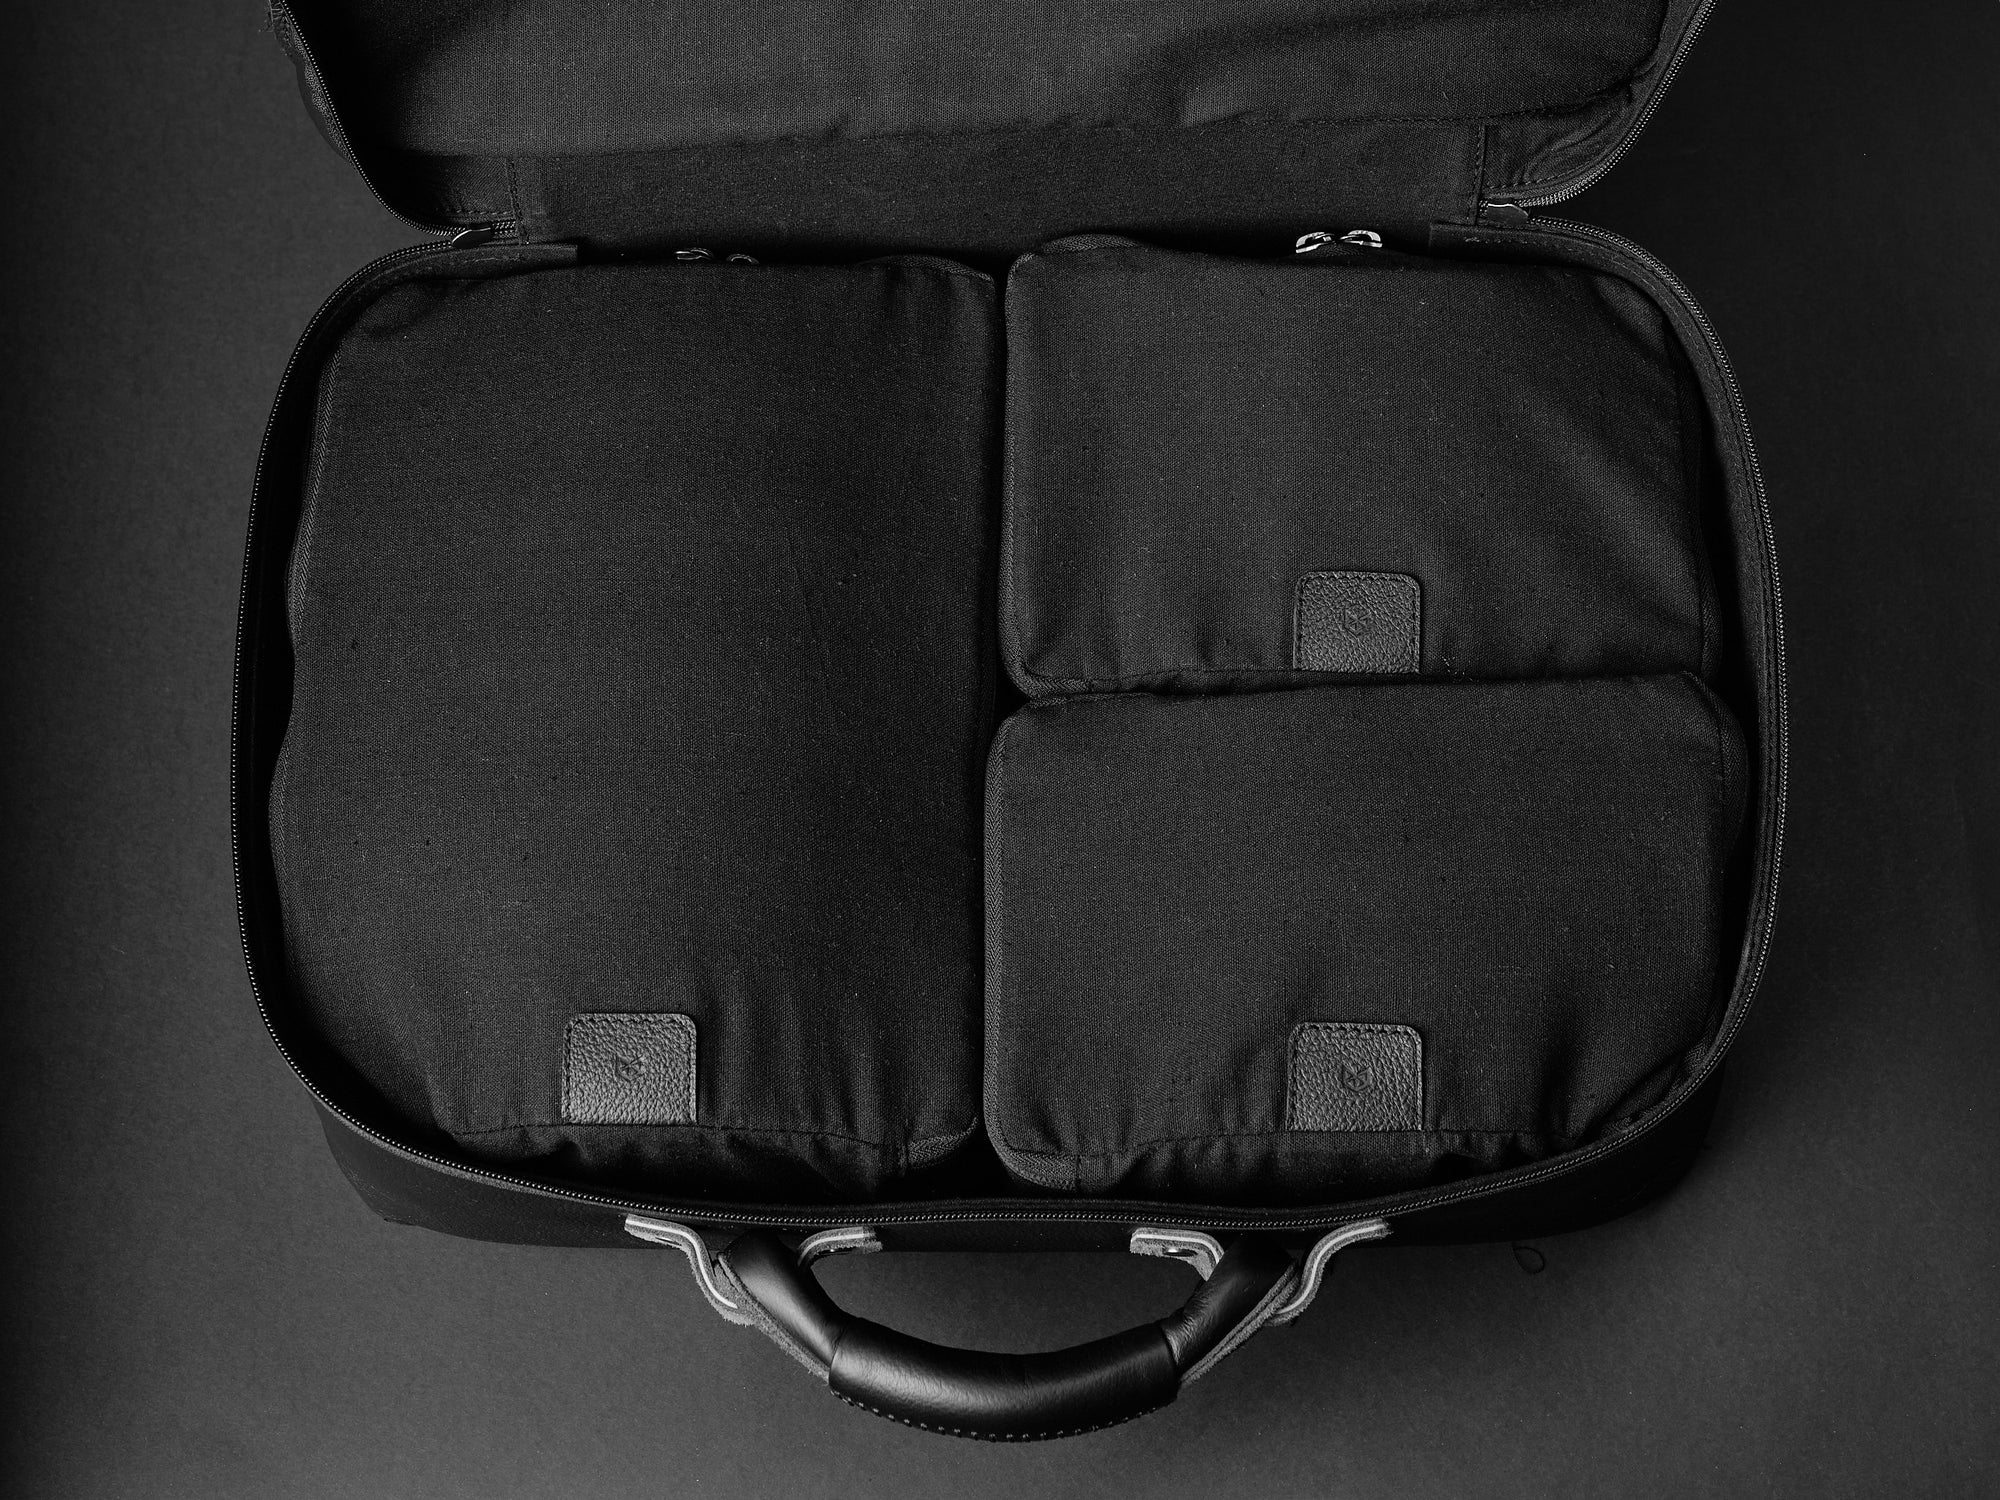 Leather weekender bag packing cubes by Capra